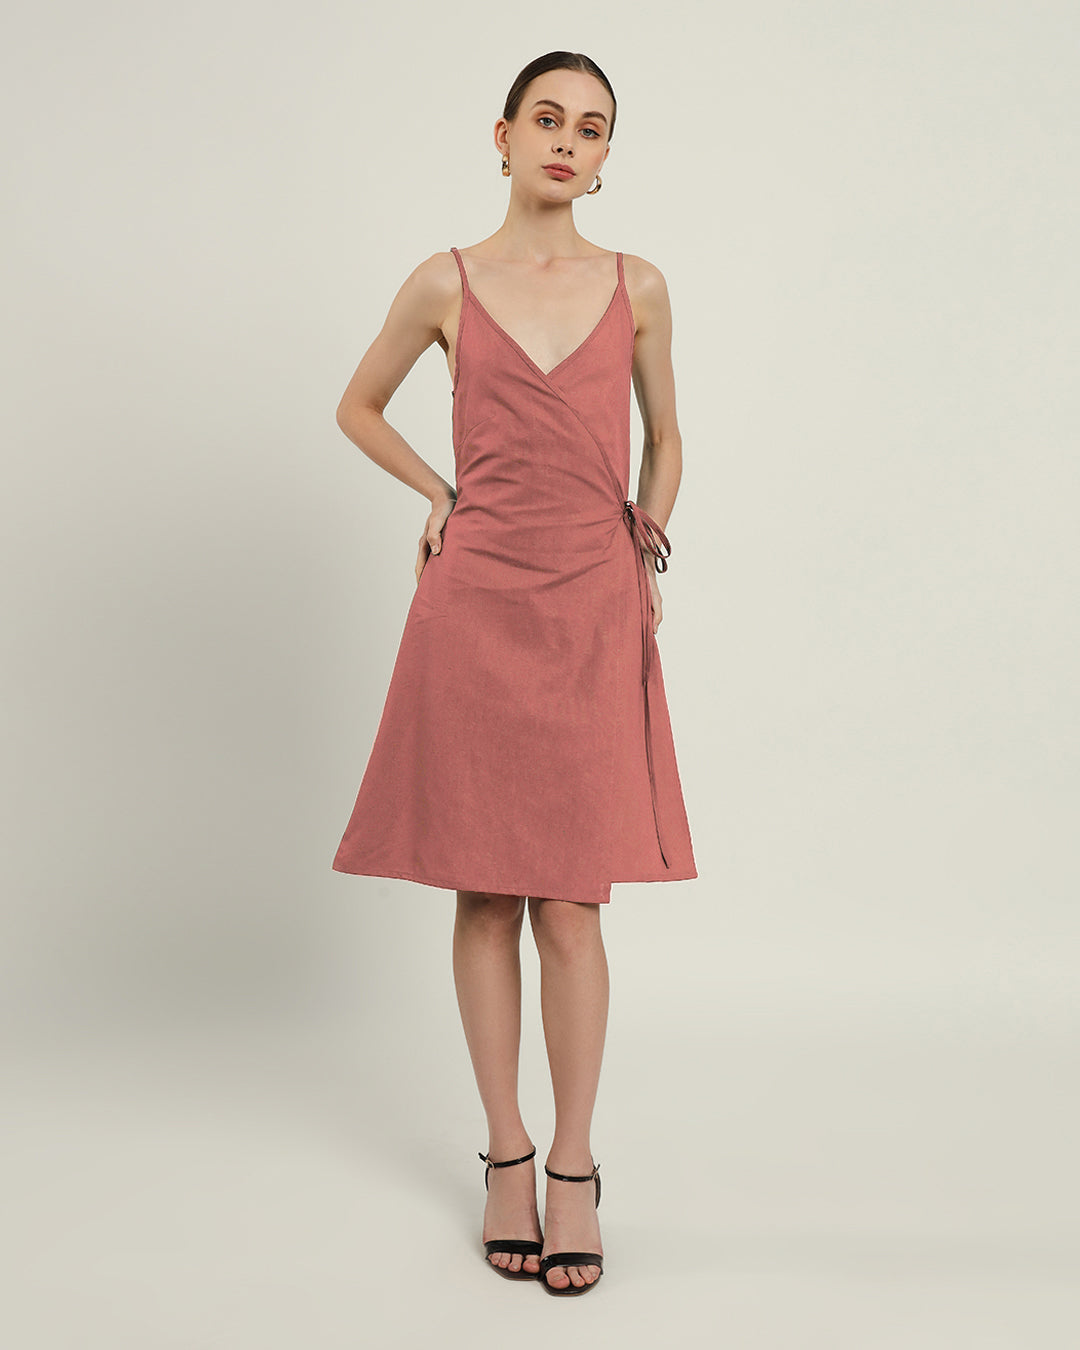 The Chambéry Ivory Pink Cotton Dress